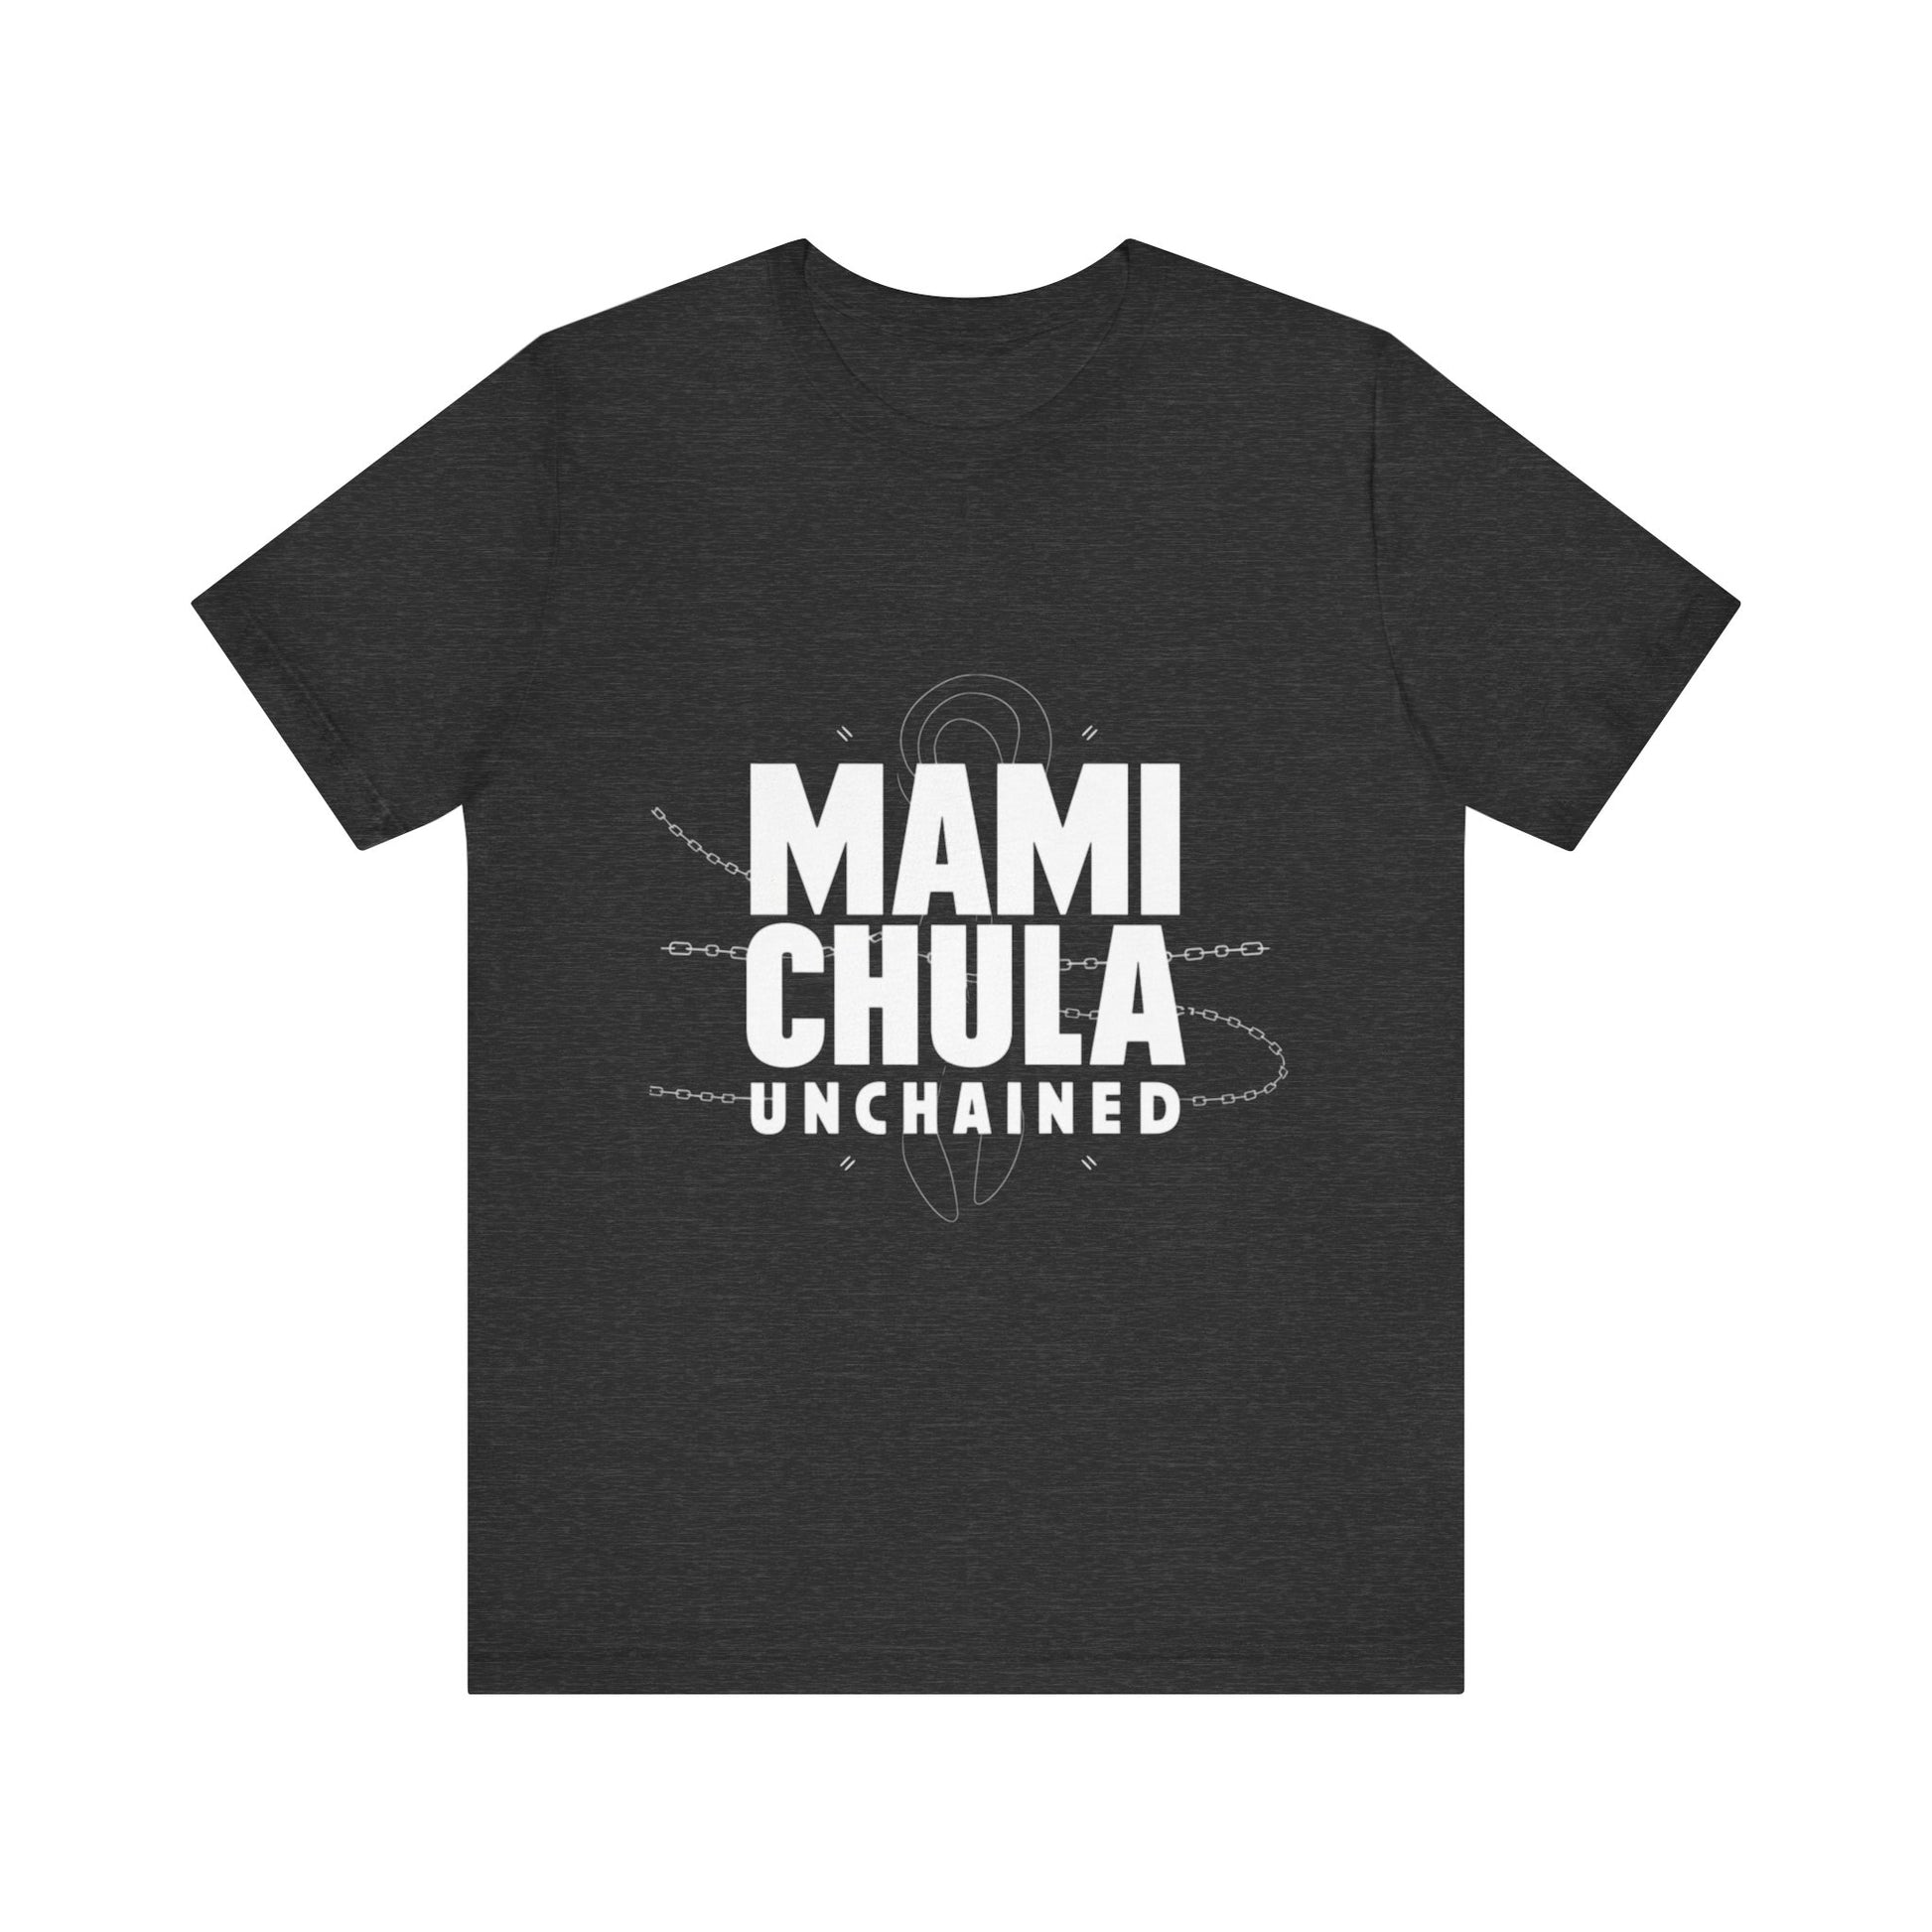 Mami Chula Unchained Jersey Short Sleeve Tee For Women - EvoFash 